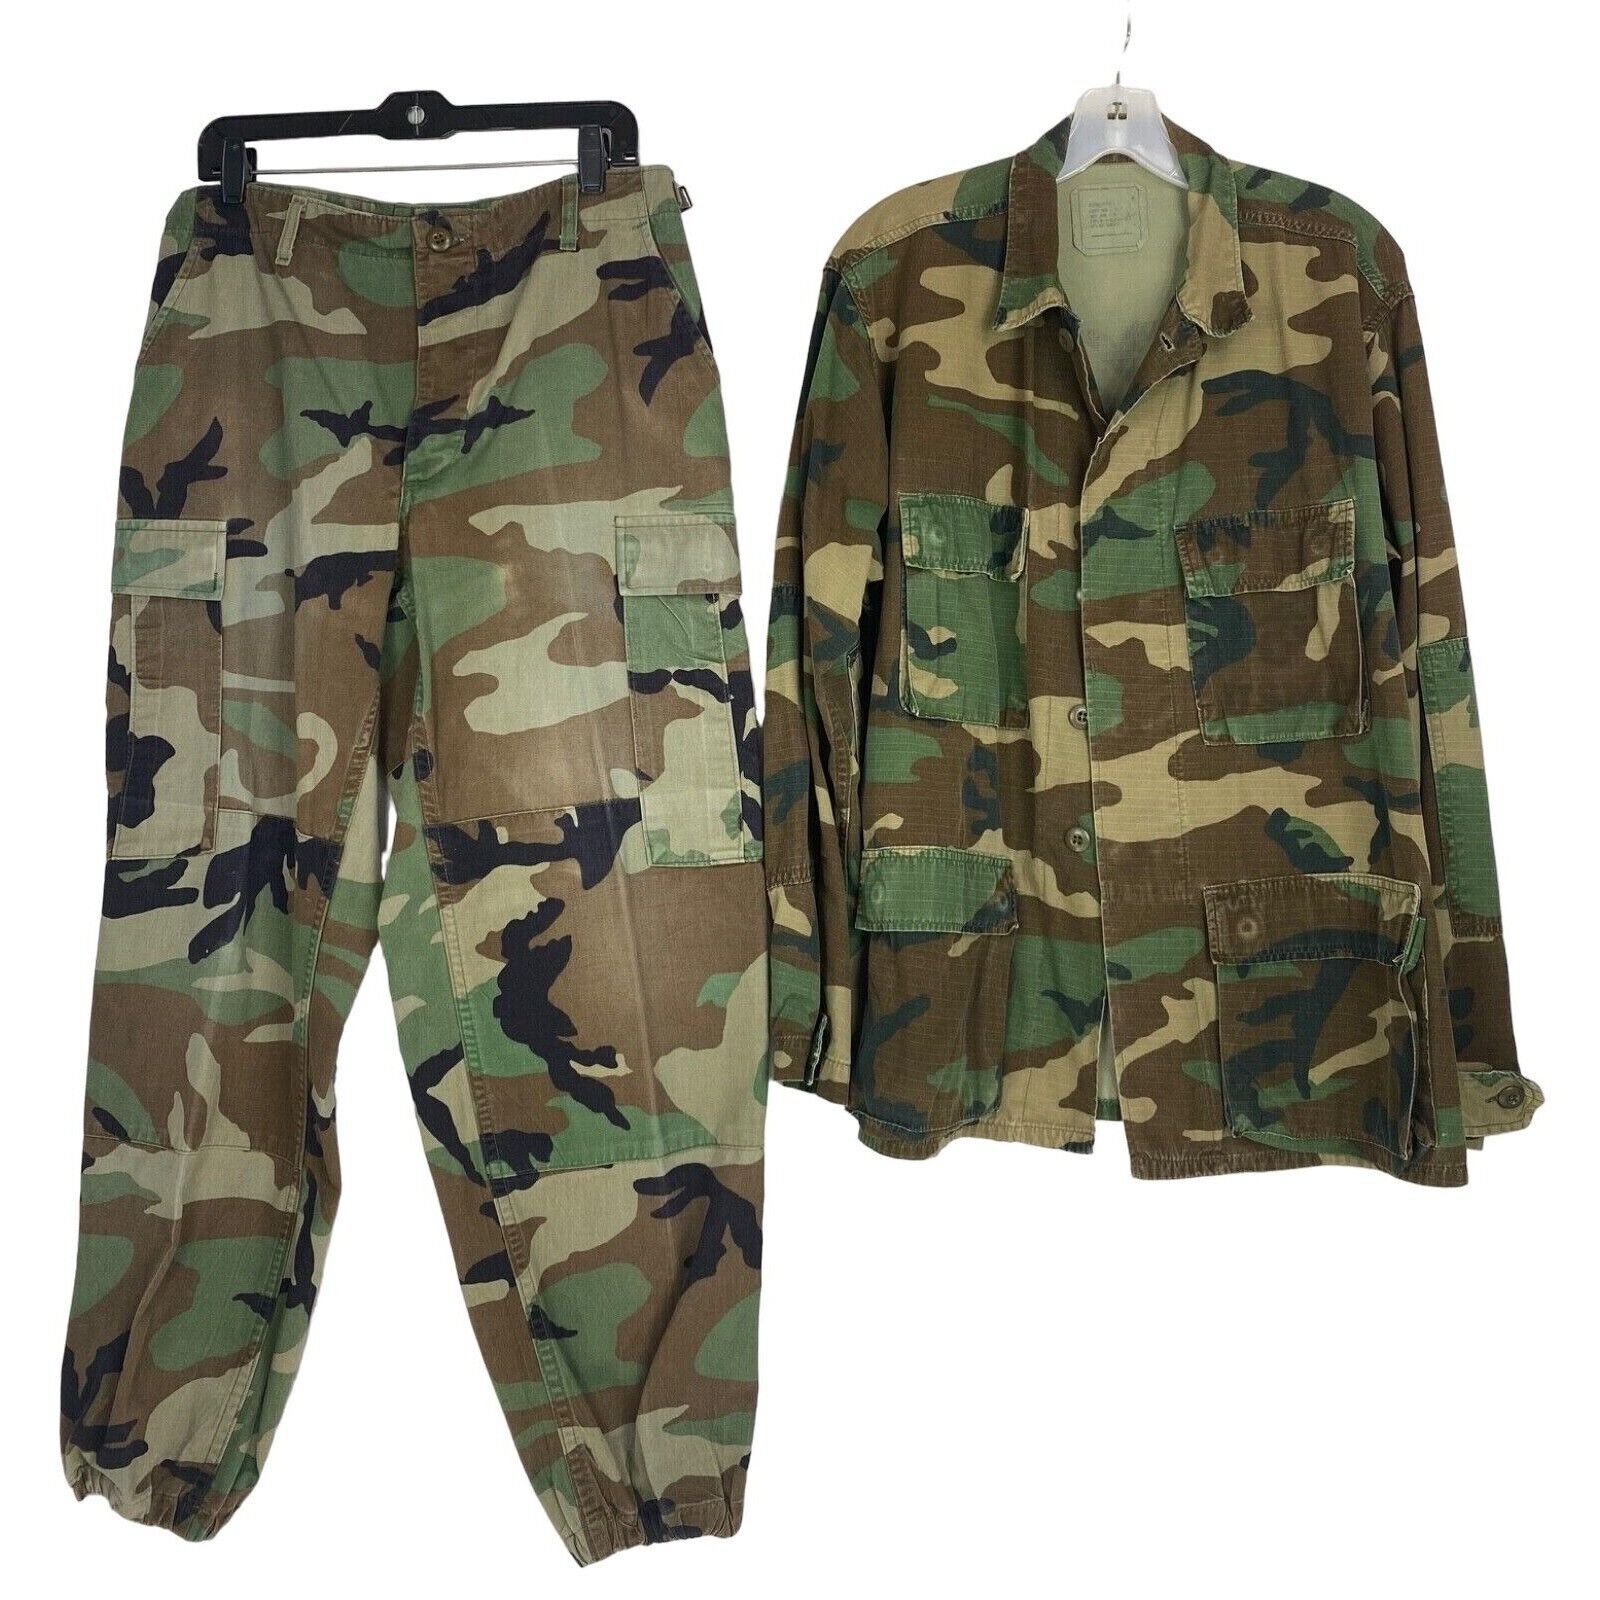 US Army Camouflage Pants and Shirt - Pants Size Medium Short - Shirt Size Medium